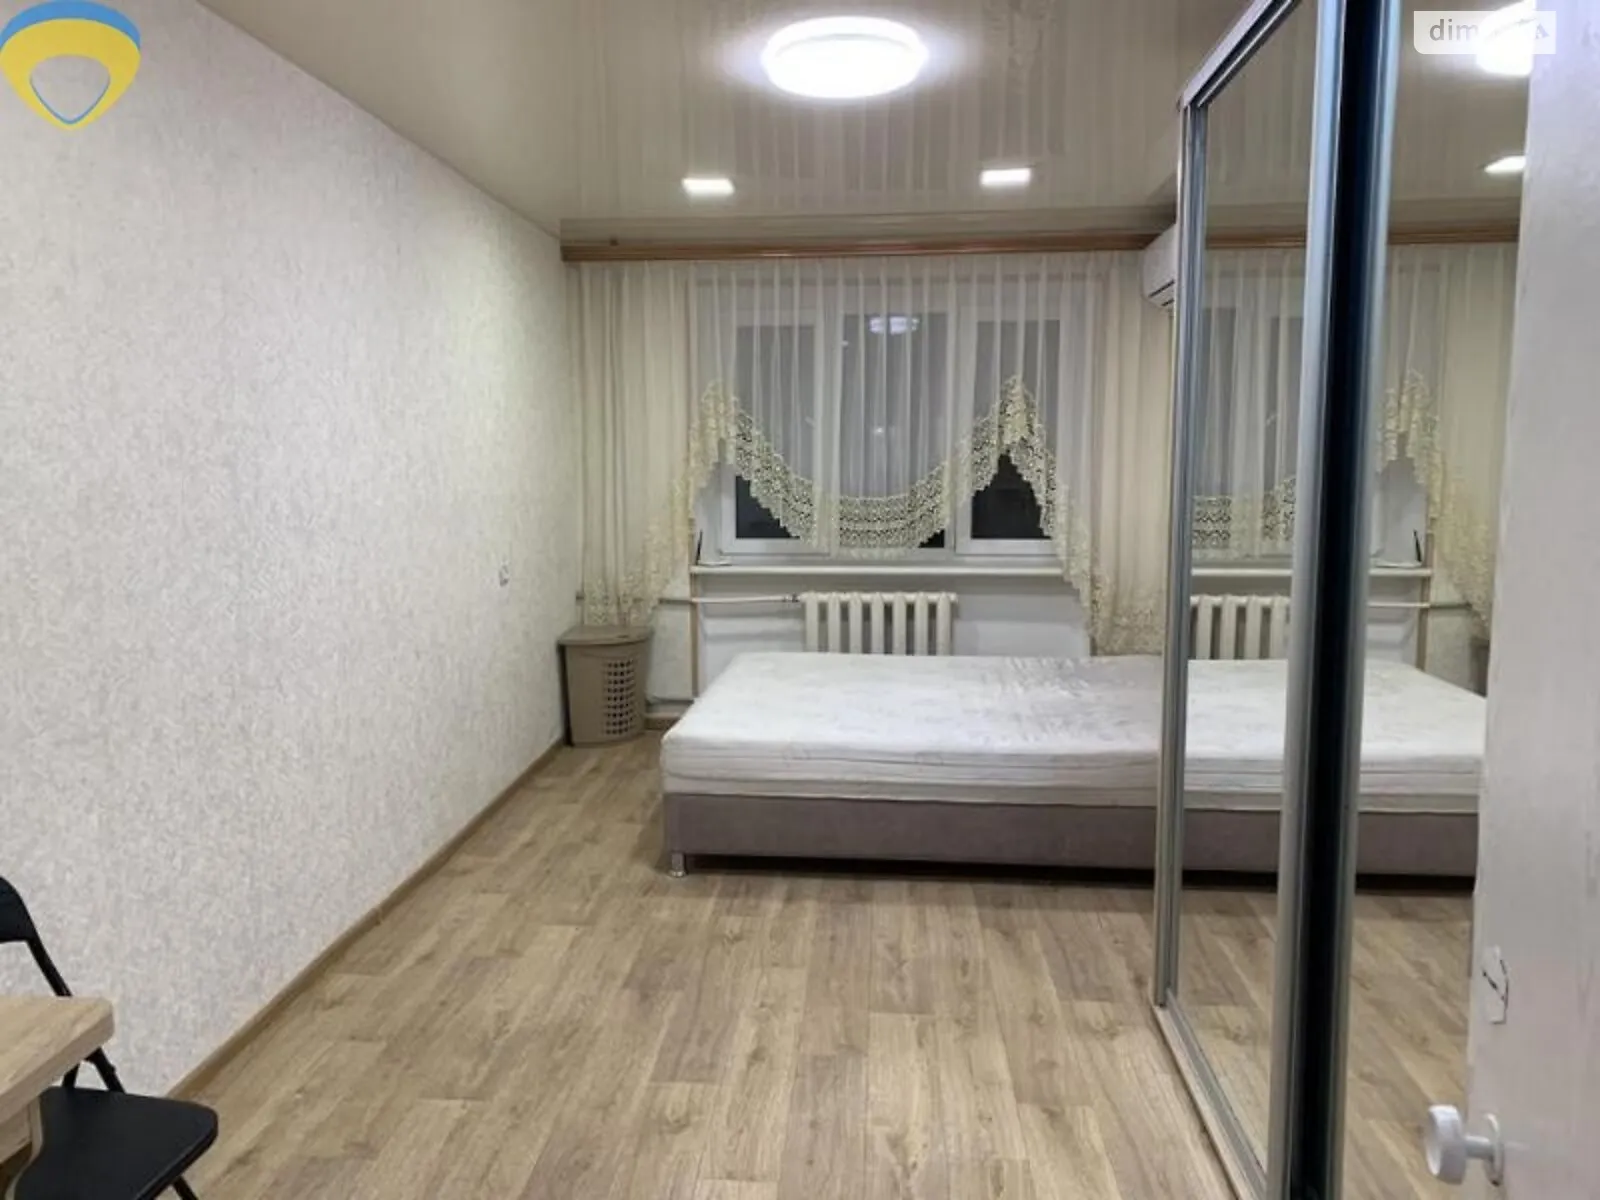 Продается комната 22 кв. м в Одессе, цена: 11800 $ - фото 1